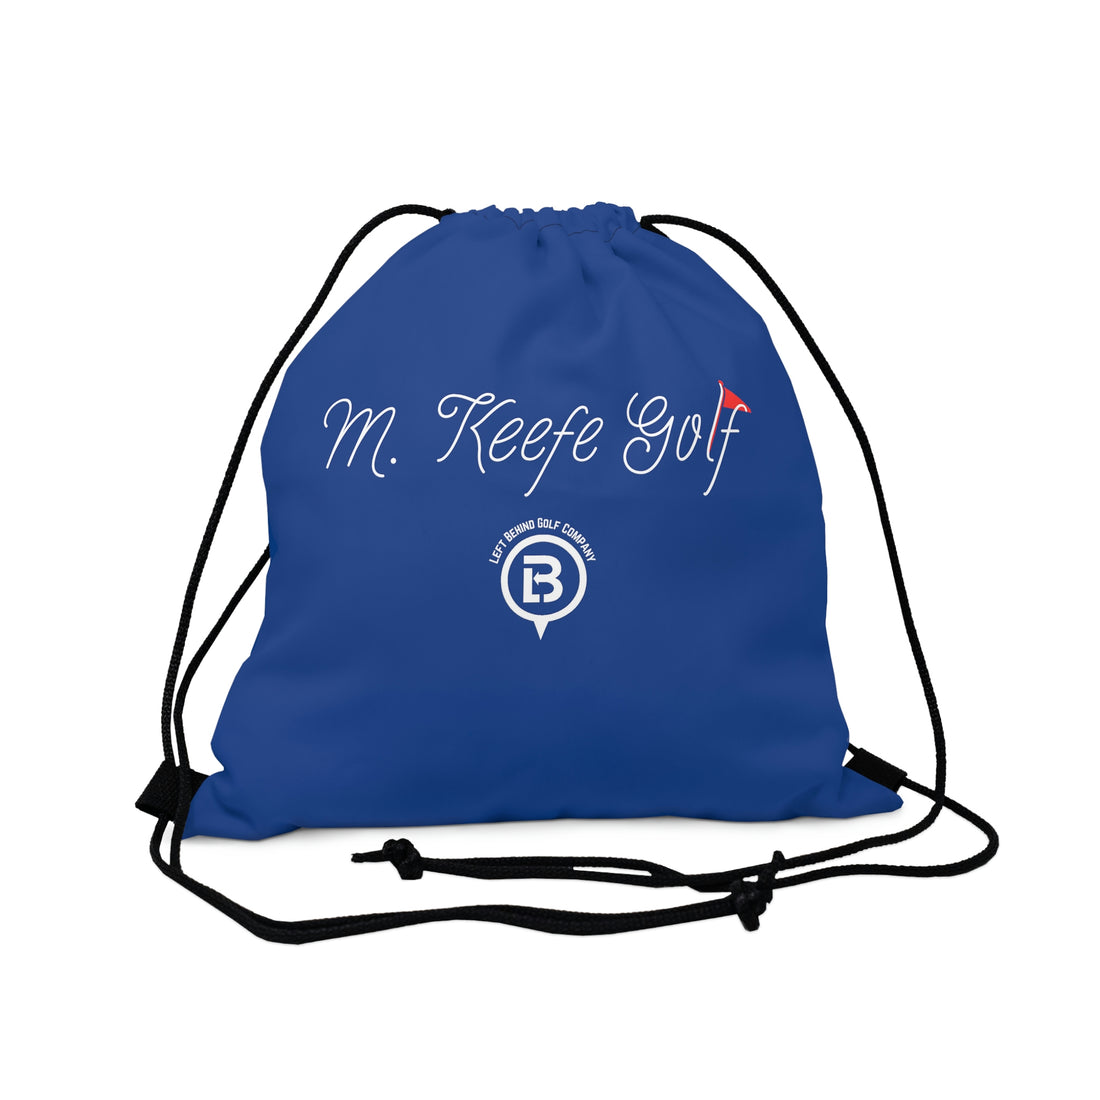 M.Keefe Golf Shoe Bag (Blue)